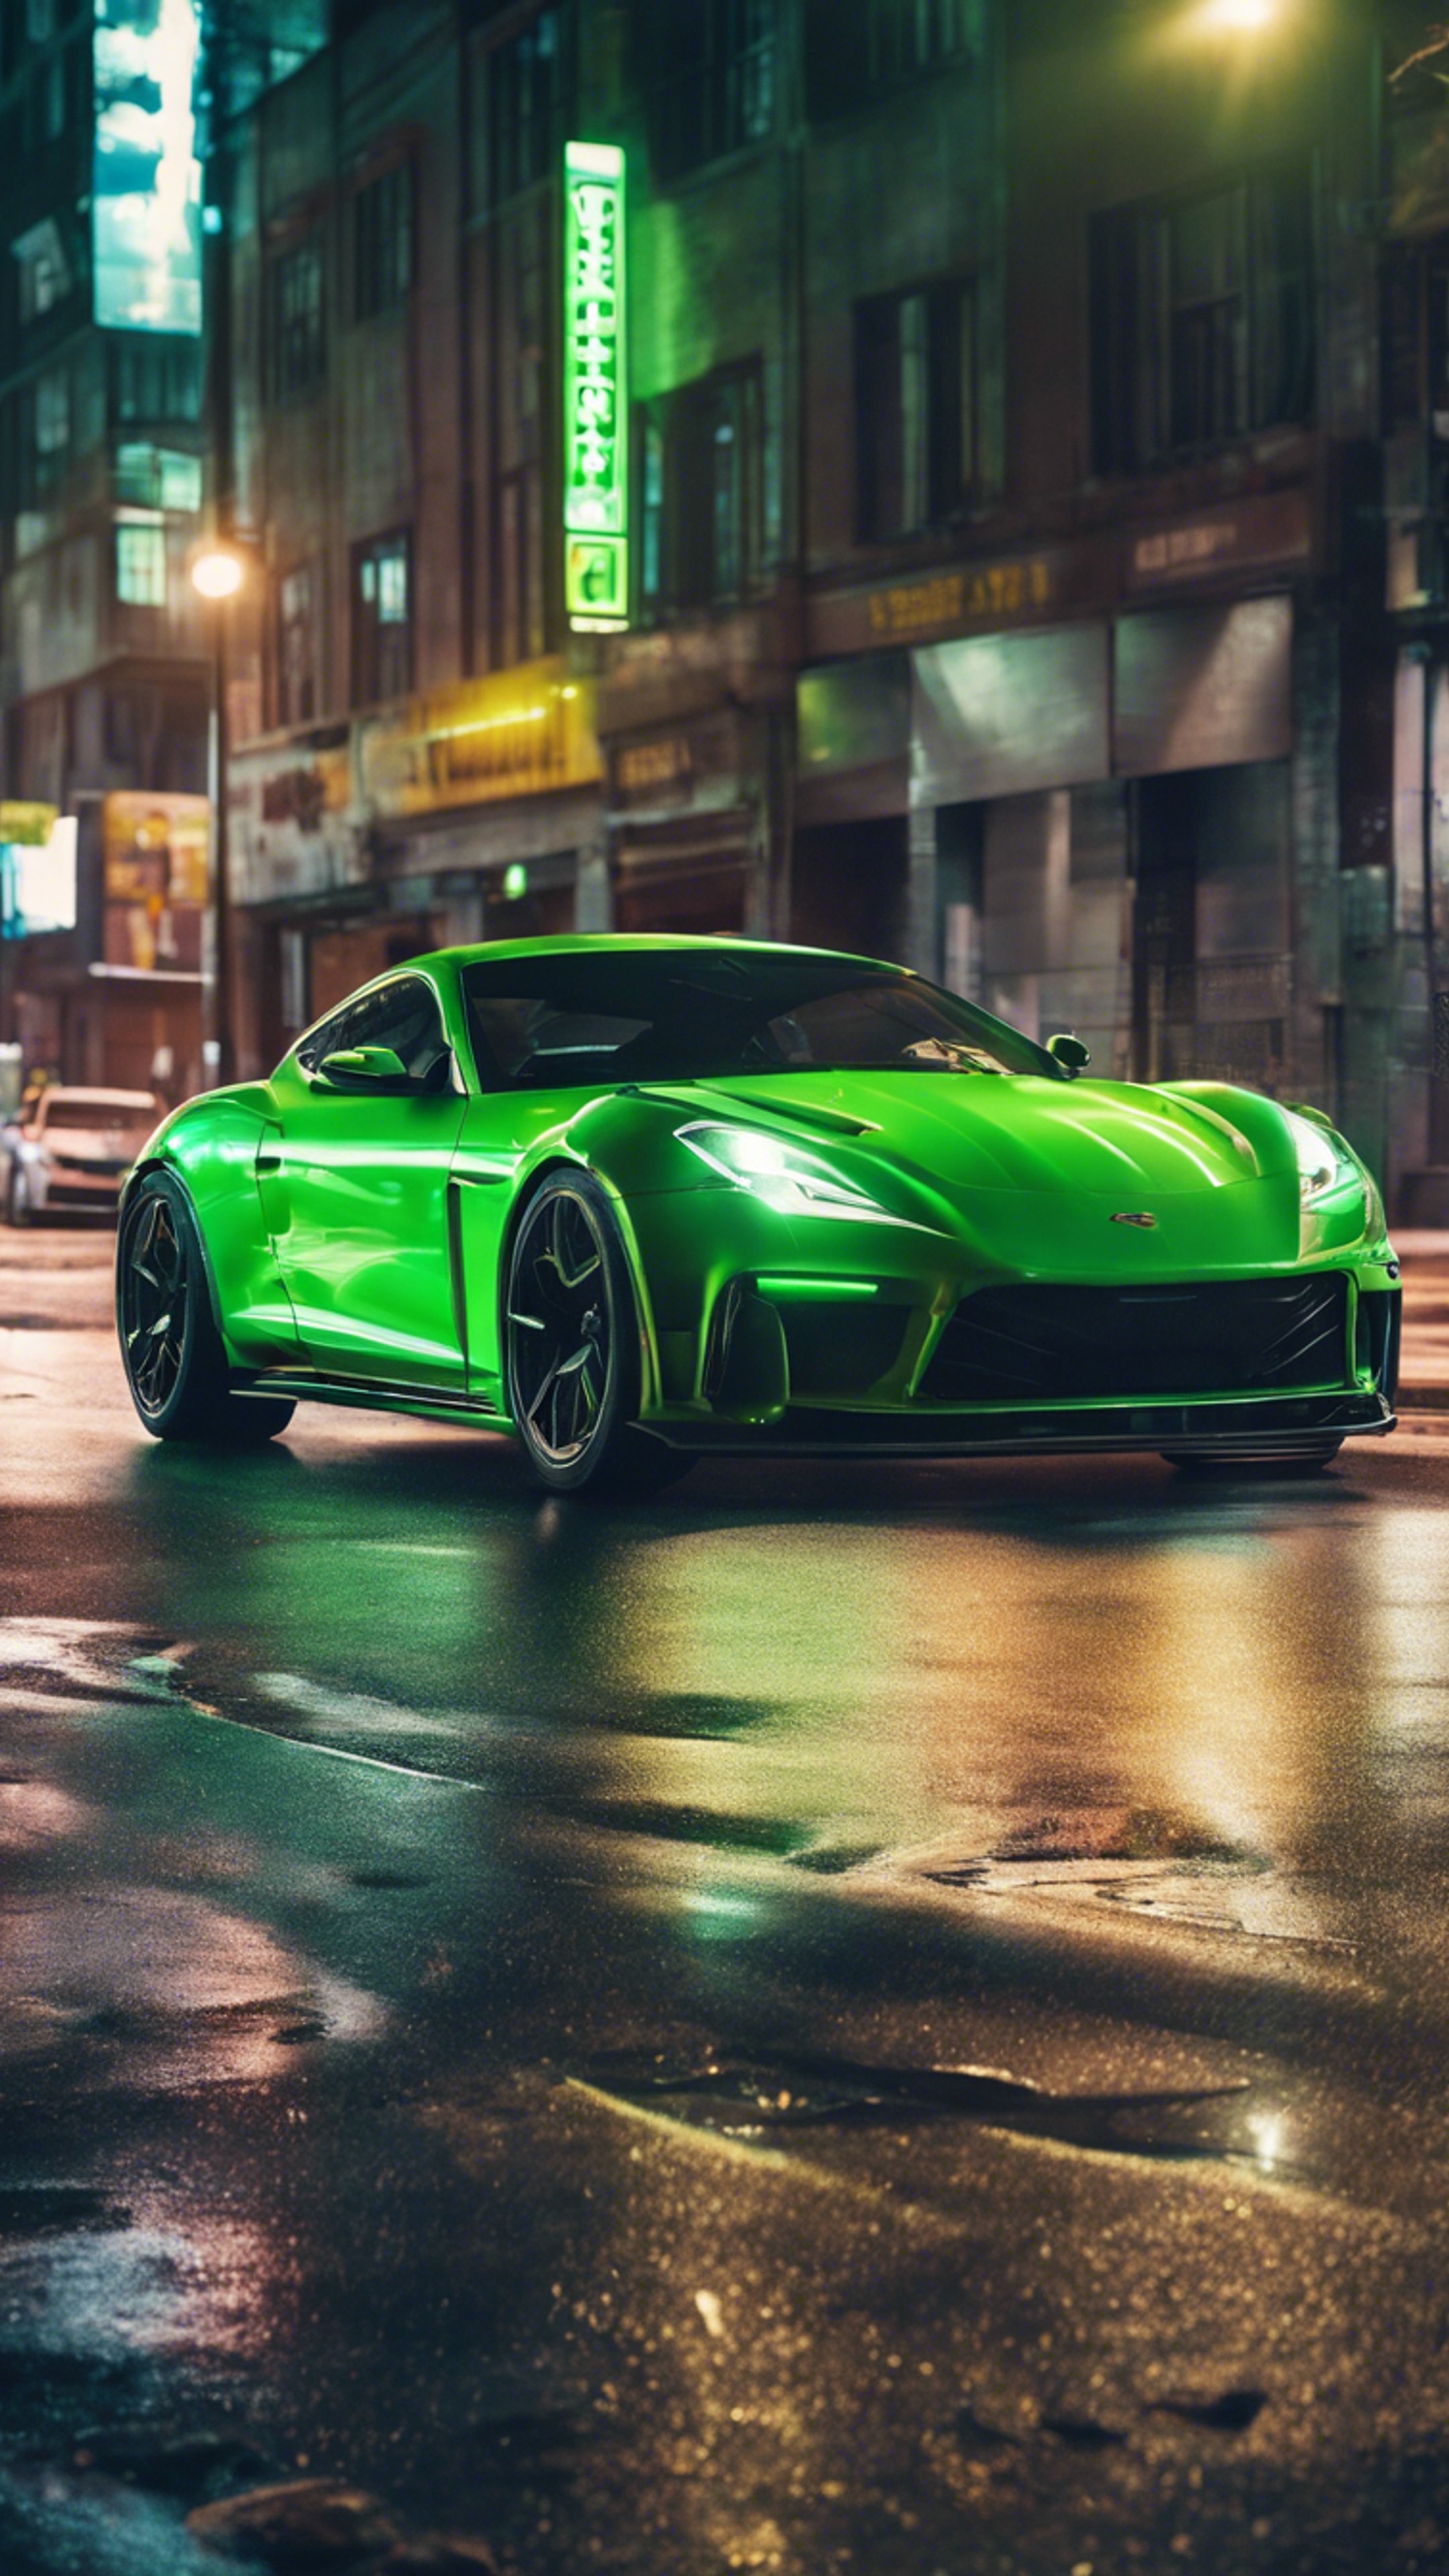 A cool neon green sports car racing down a city street at night. Tapetai[ff2aa681813144c0b5f6]